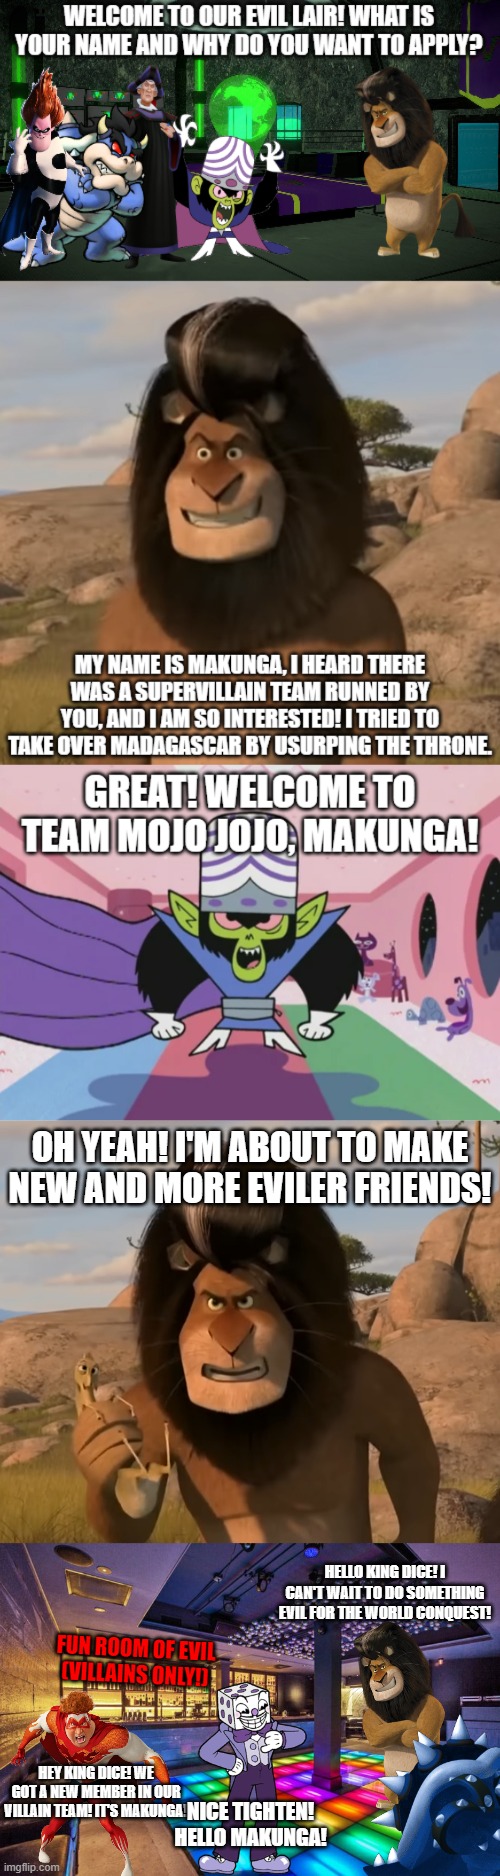 Makunga Joins Team Mojo Jojo - Imgflip